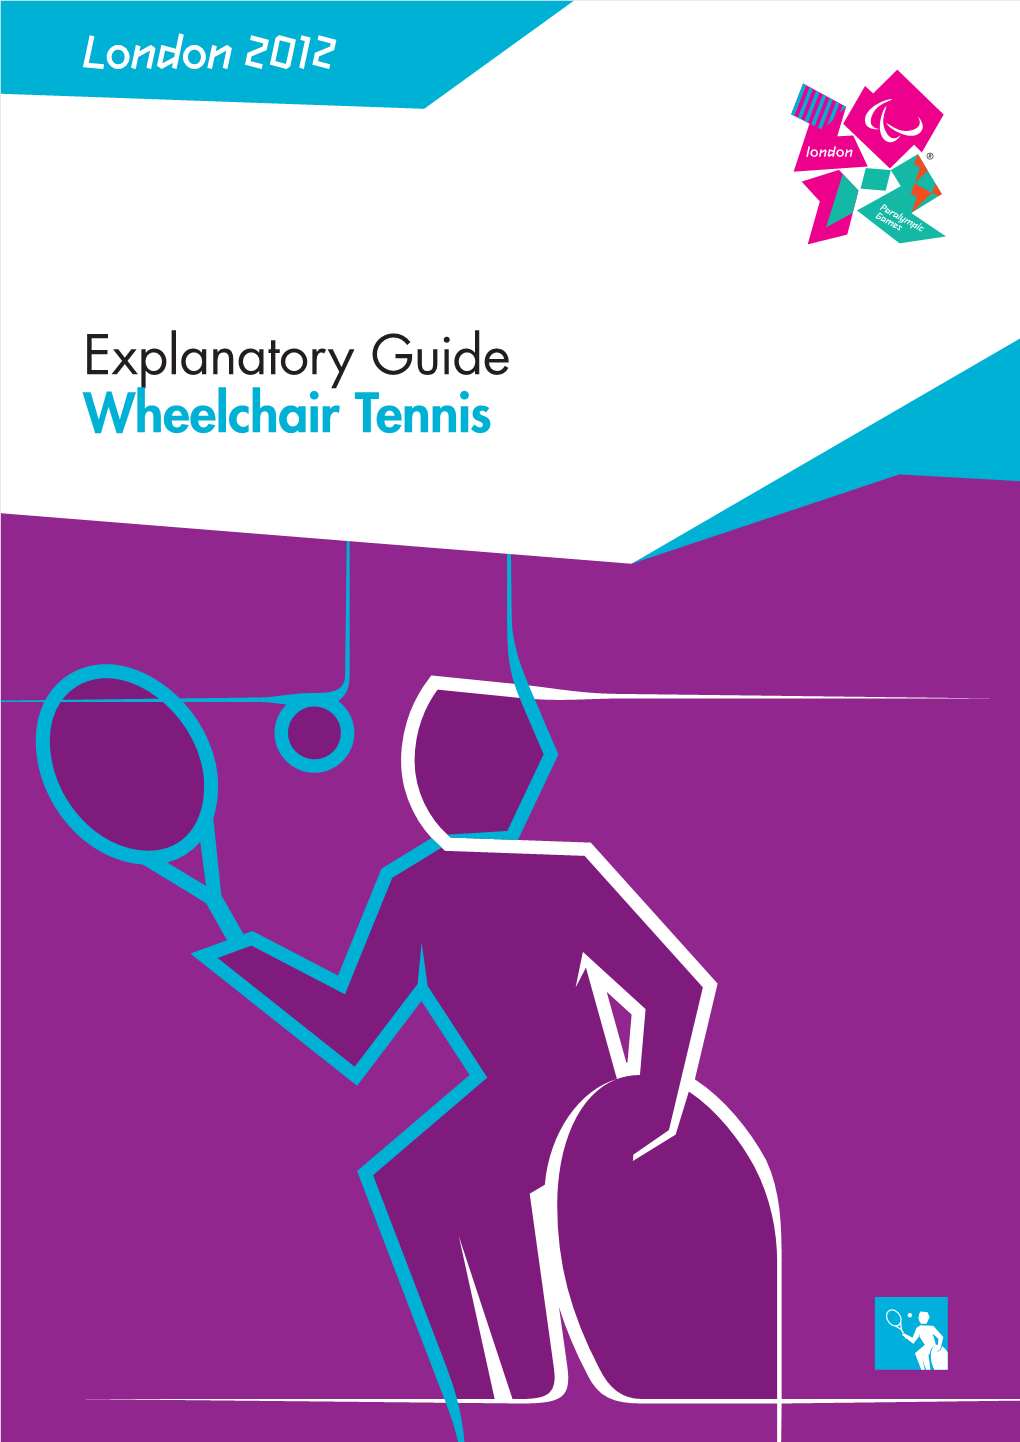 London 2012 Explanatory Guide Wheelchair Tennis